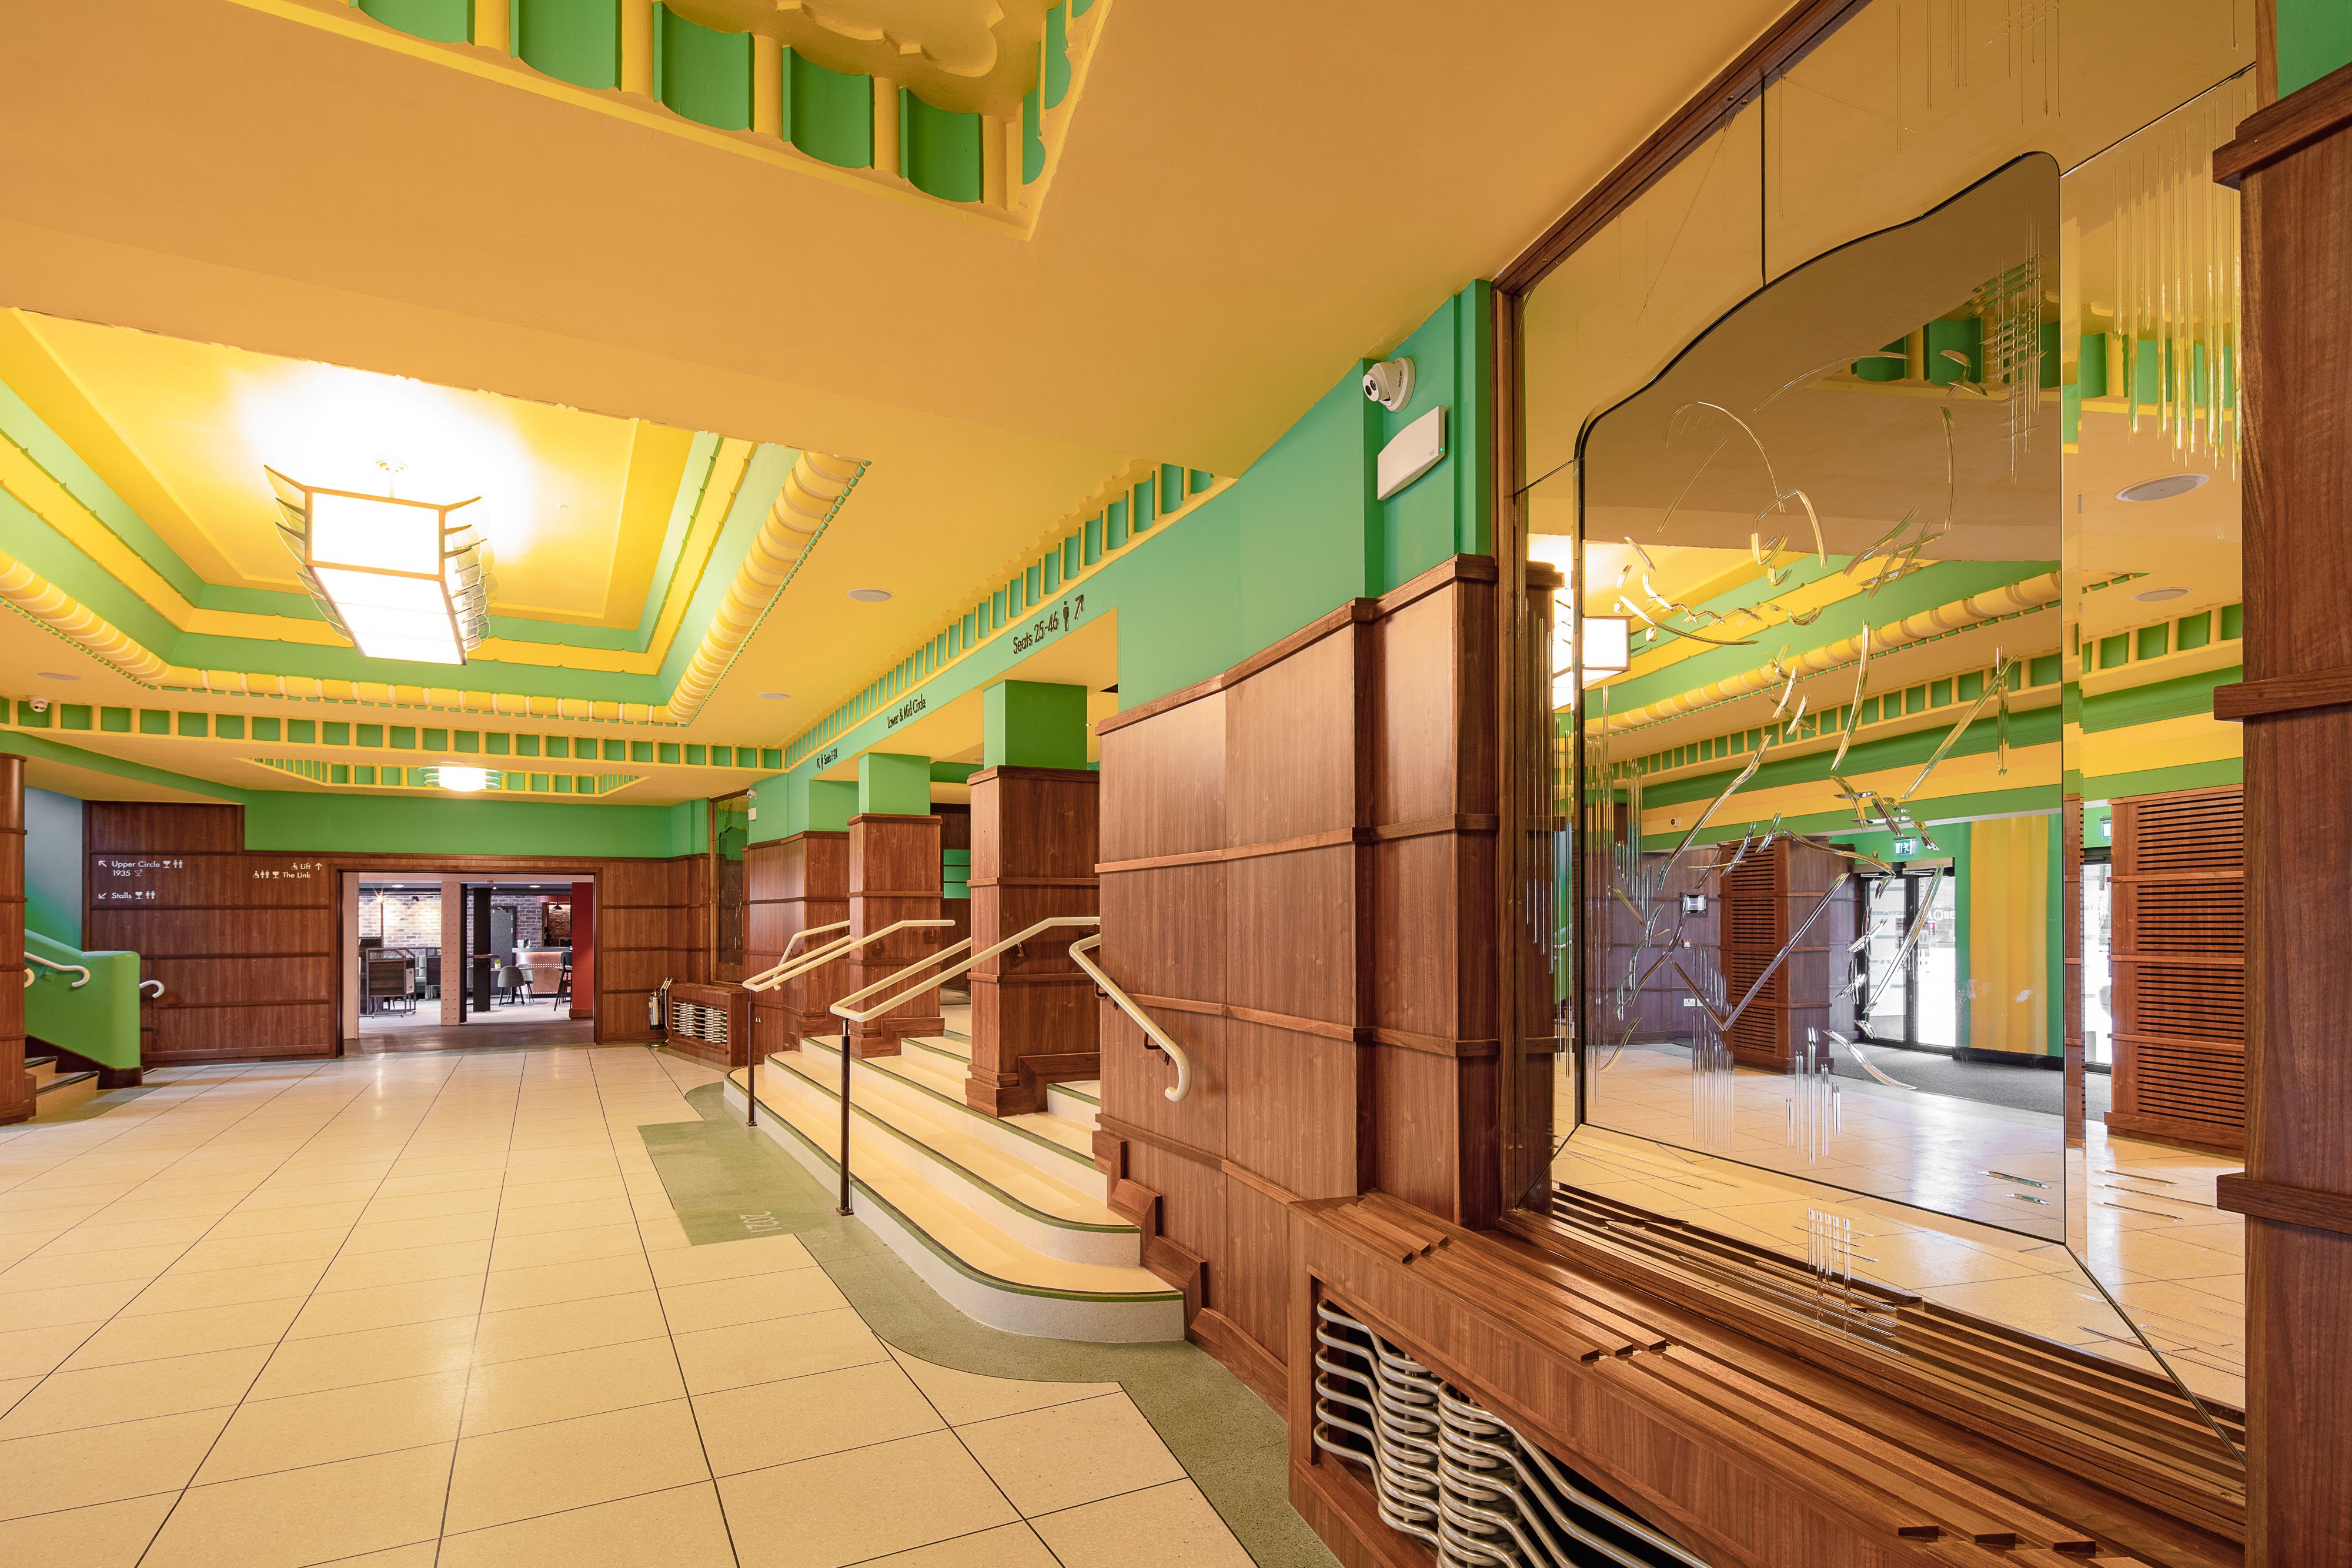 Main lobby area inside Stockton Globe featuring Art Deco detailing